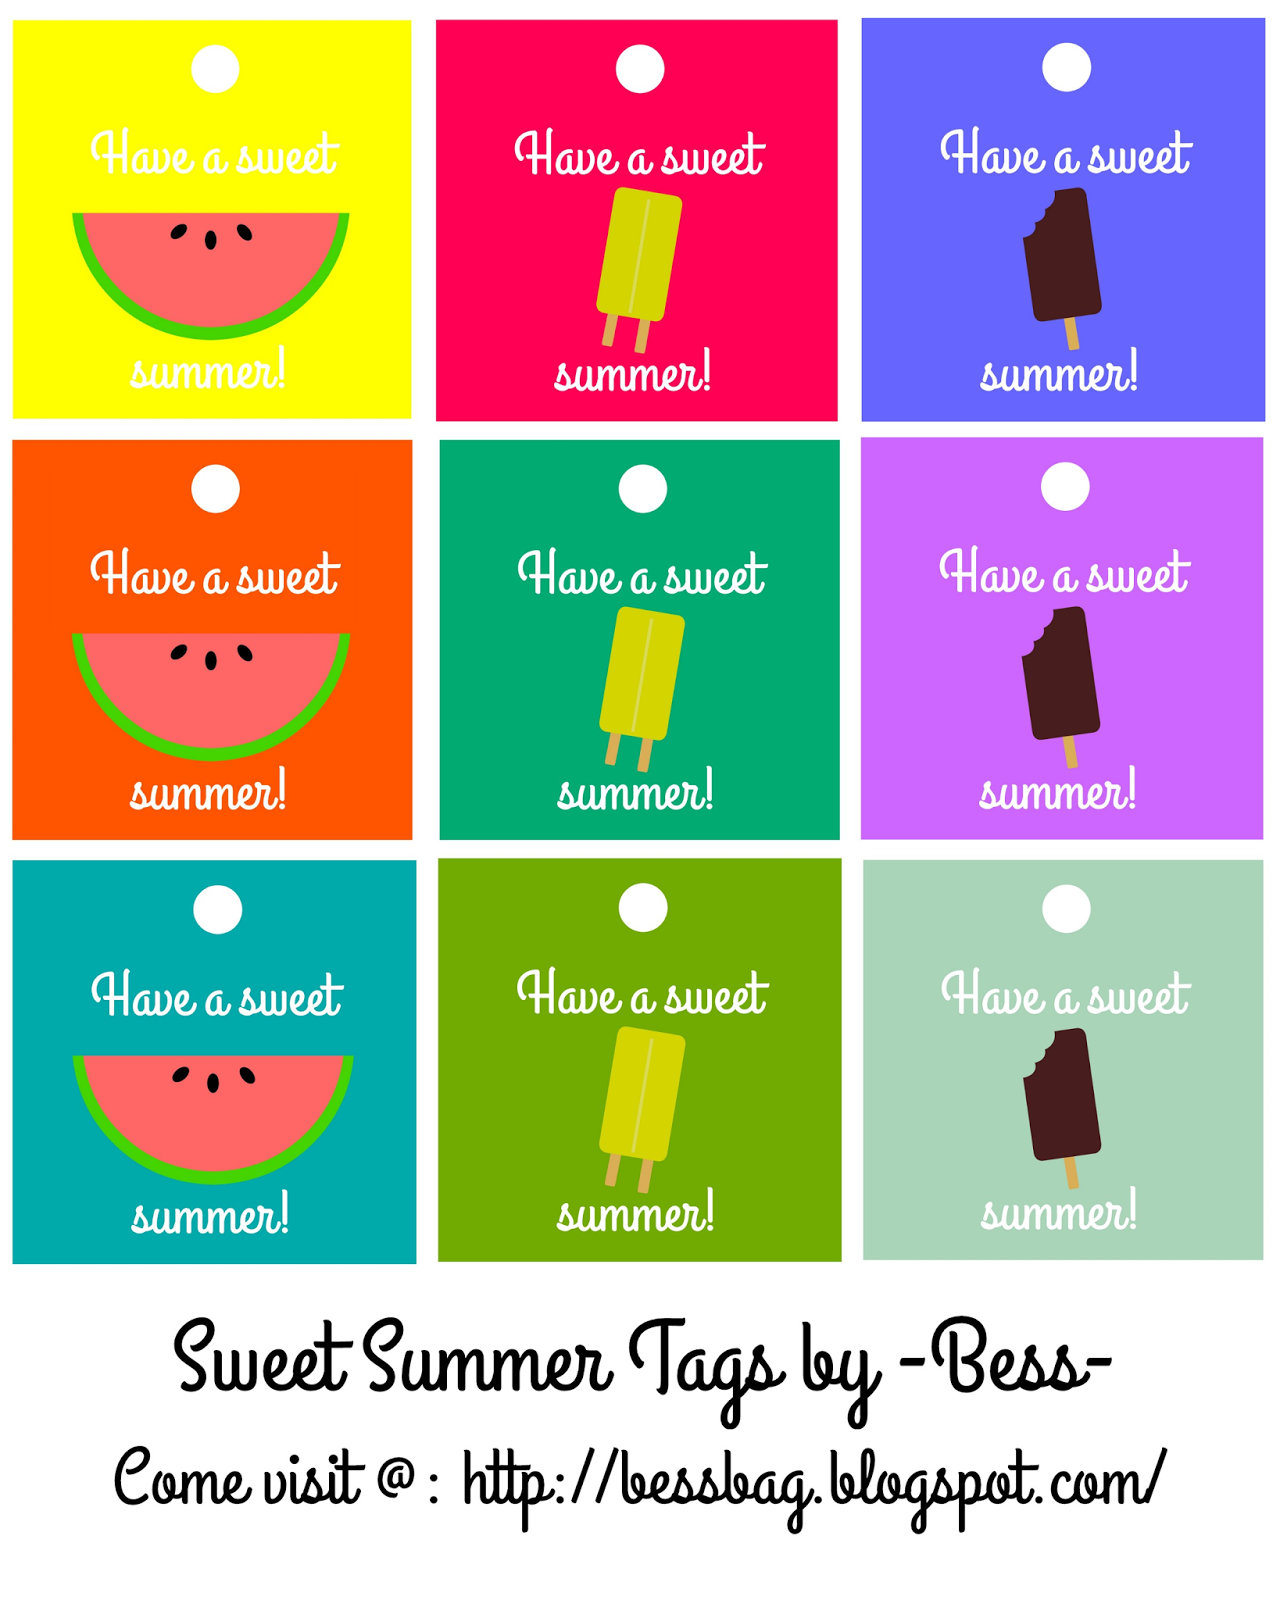 bess-bag-sweet-summer-gift-tags-free-printable